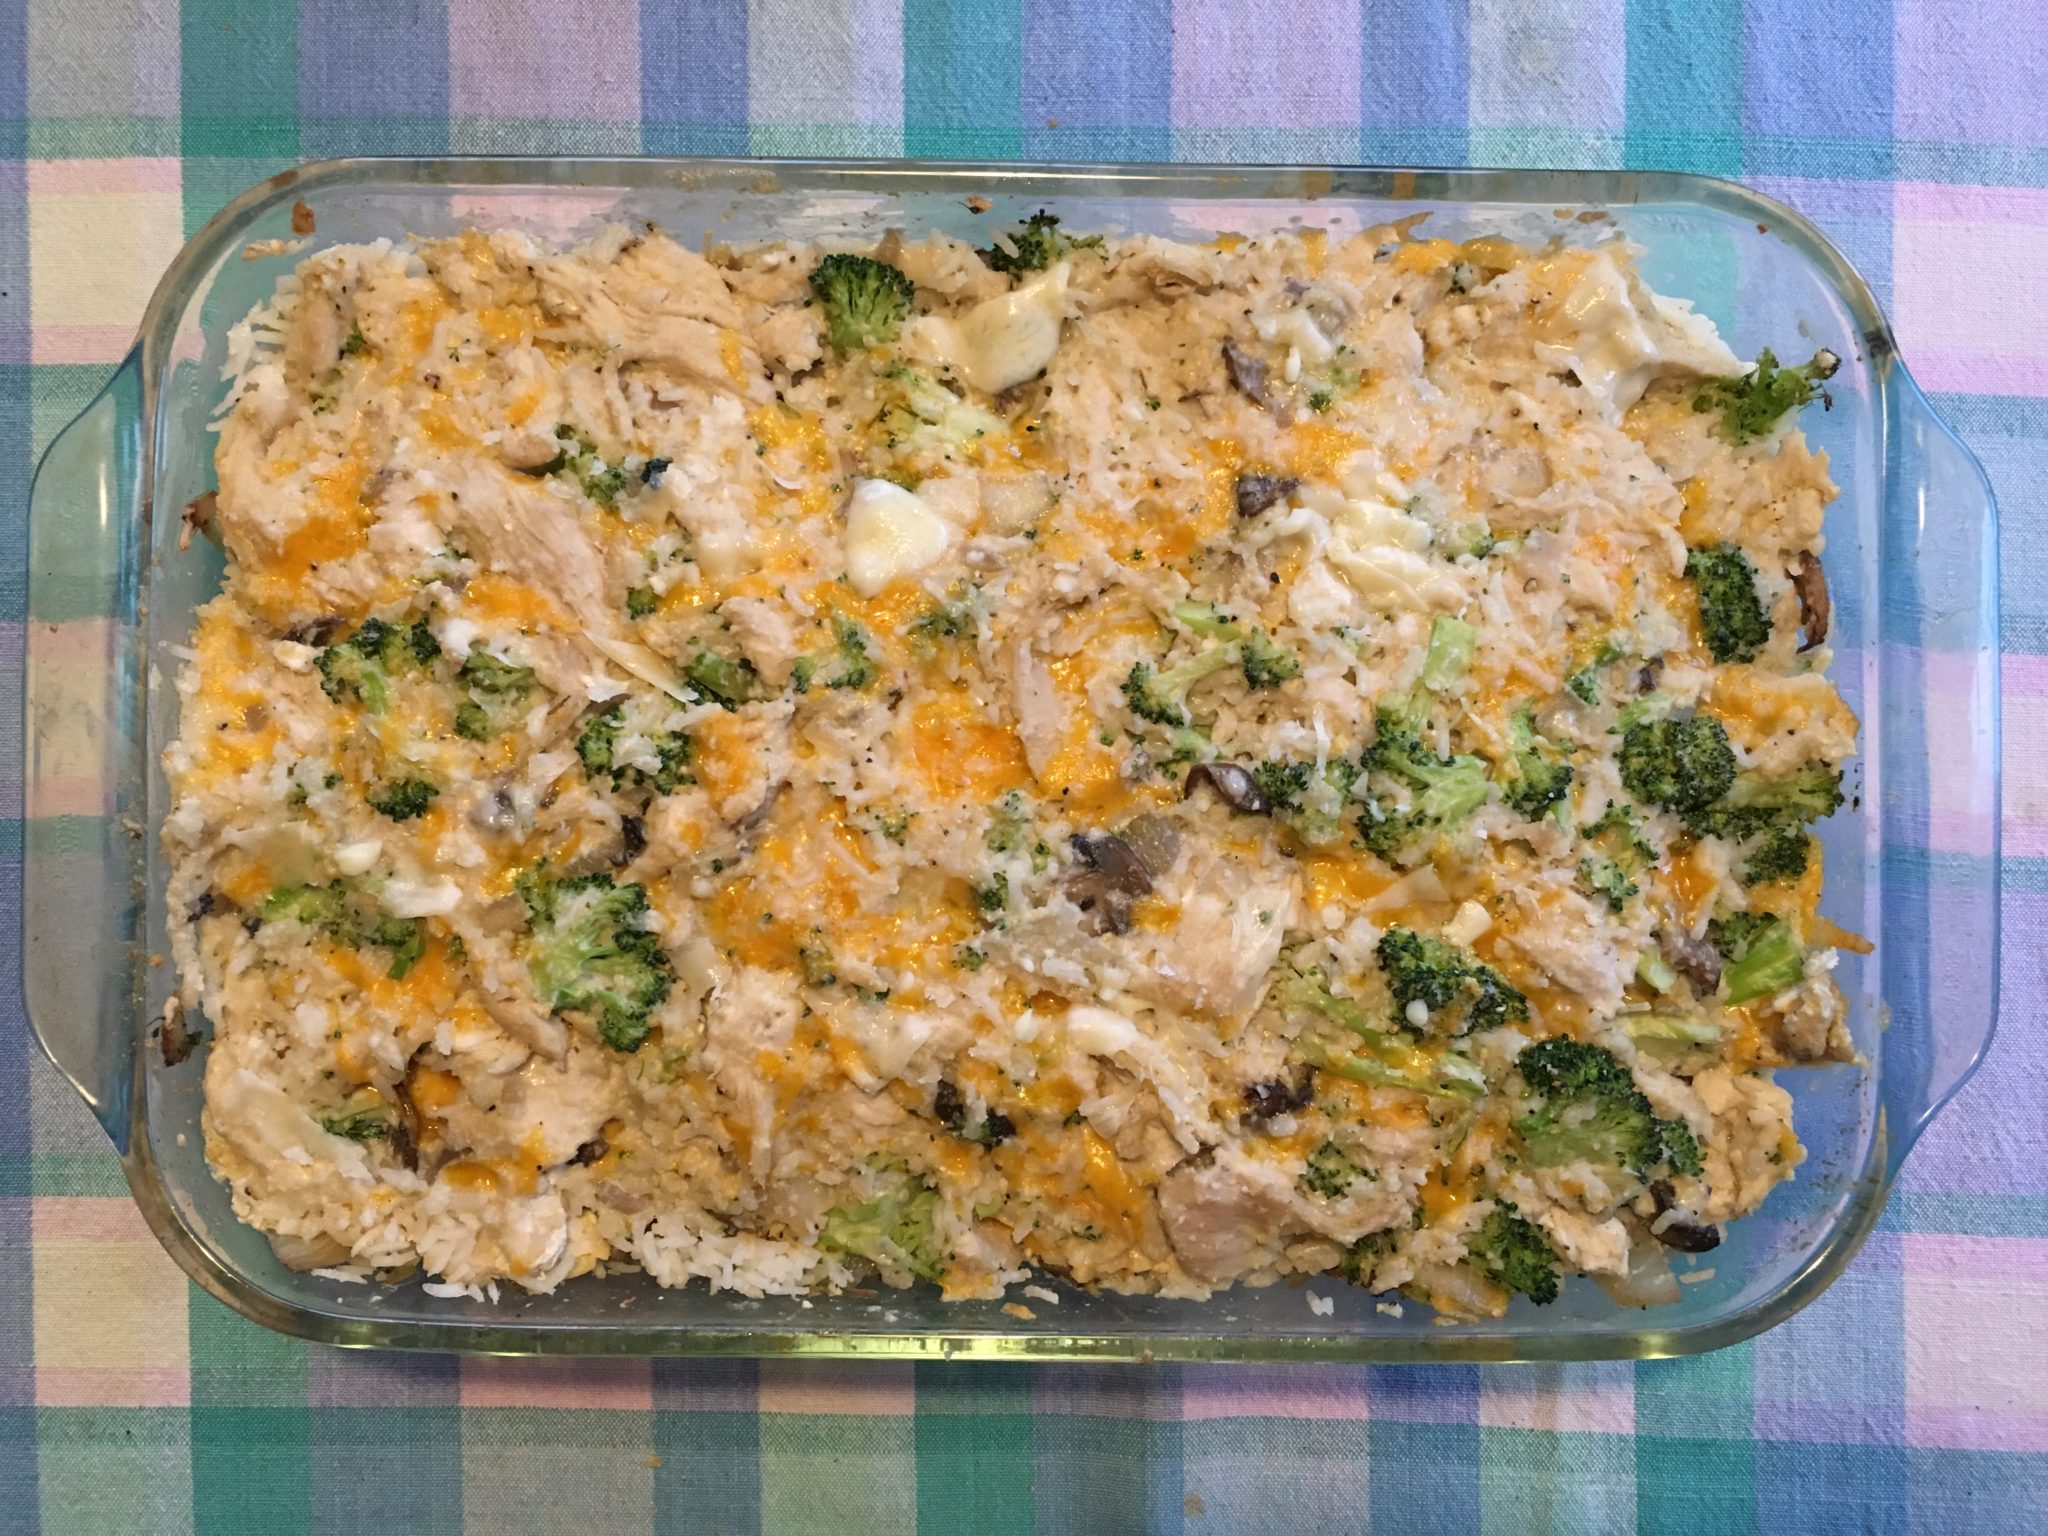 Cheddar Broccoli & Chicken Bake by Joe Bauer